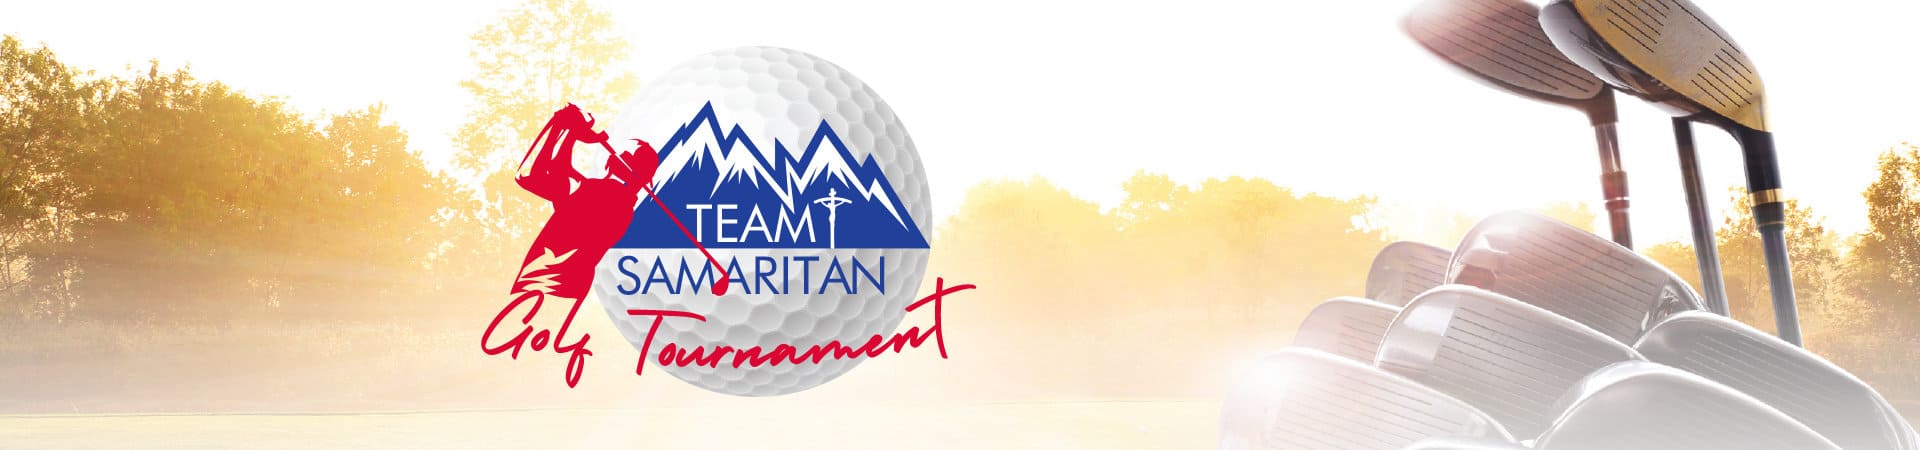 Team Samaritan 2022 Golf Tournament